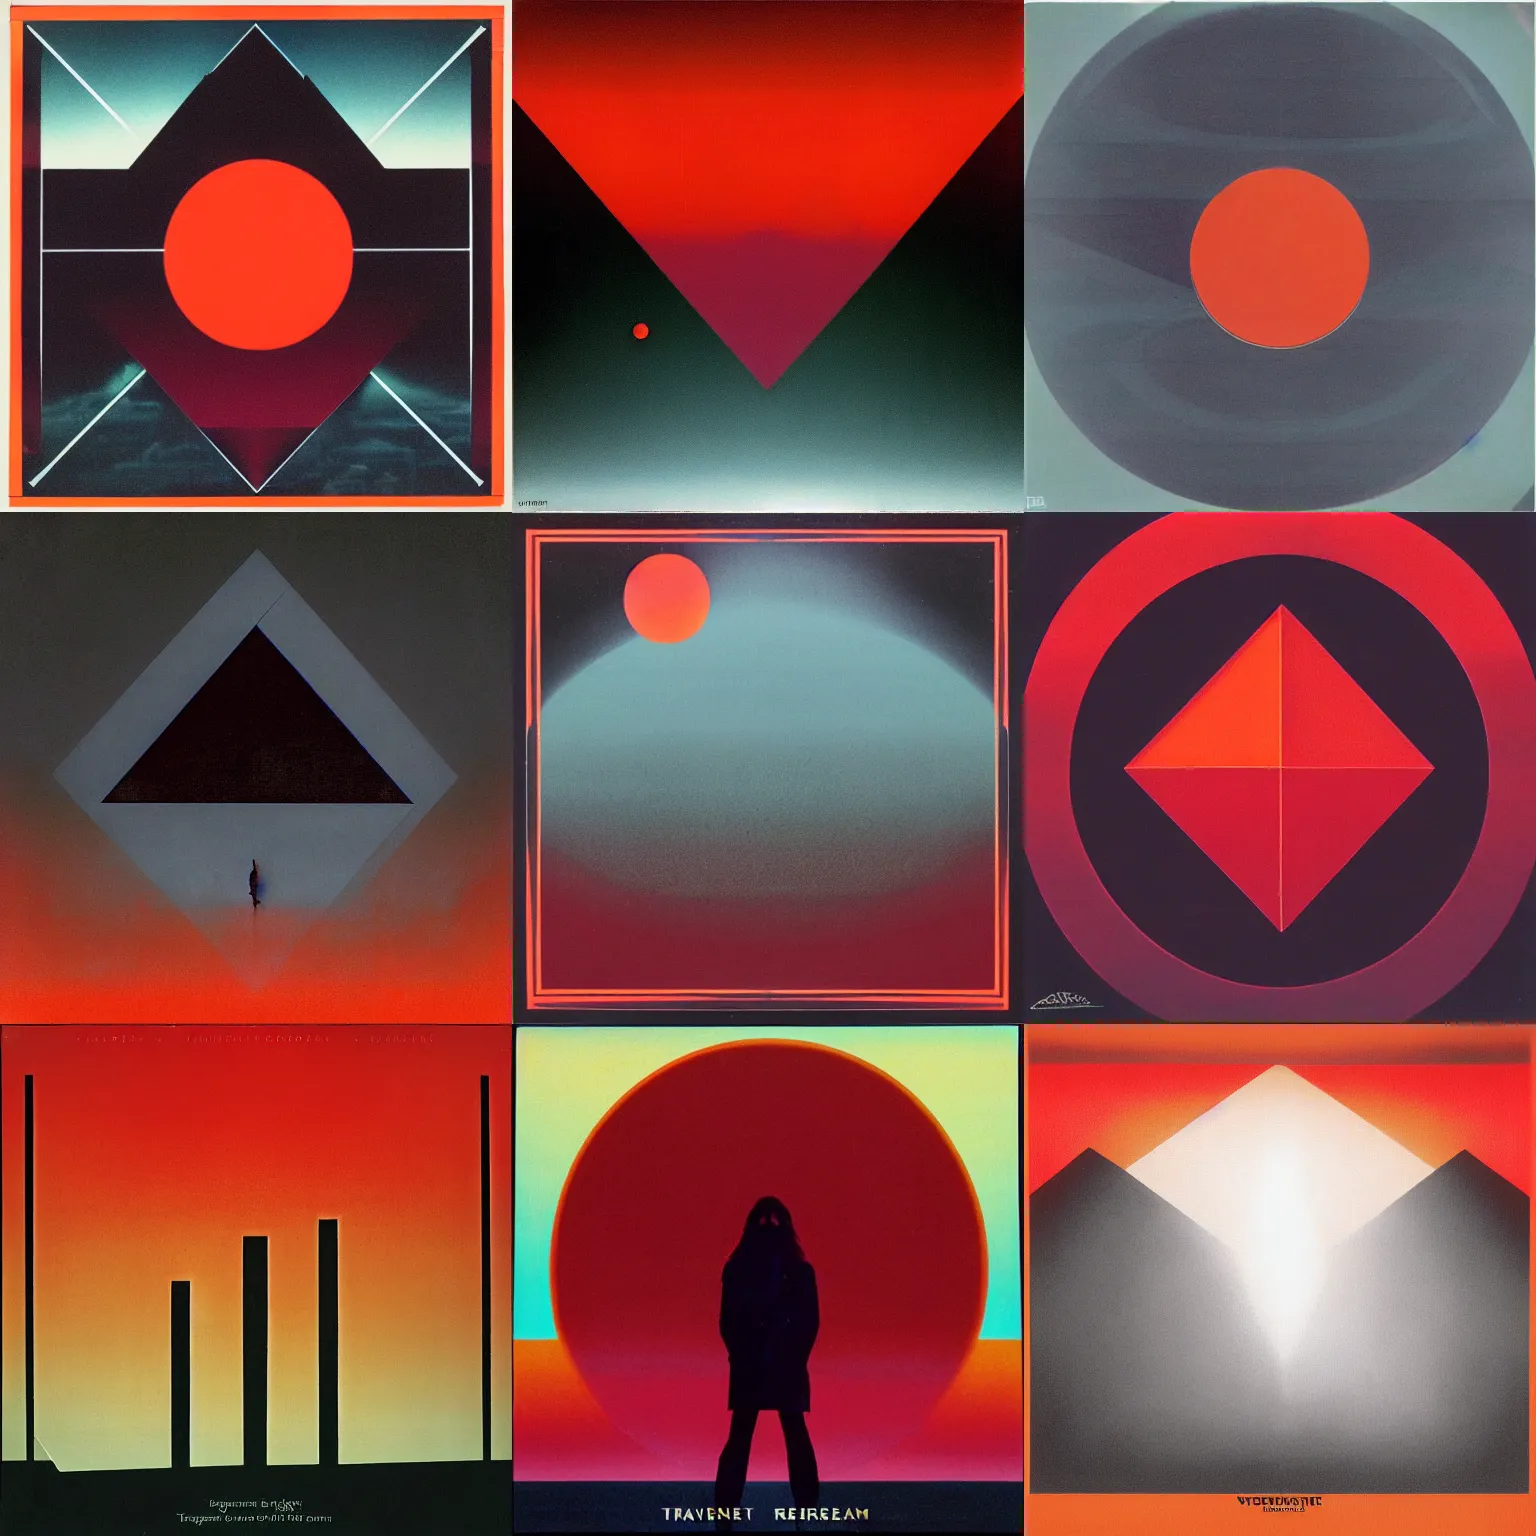 Prompt: Tangerine Dream Album Cover, Dark forbidding, fog, red glow , geometric shapes, 1970s